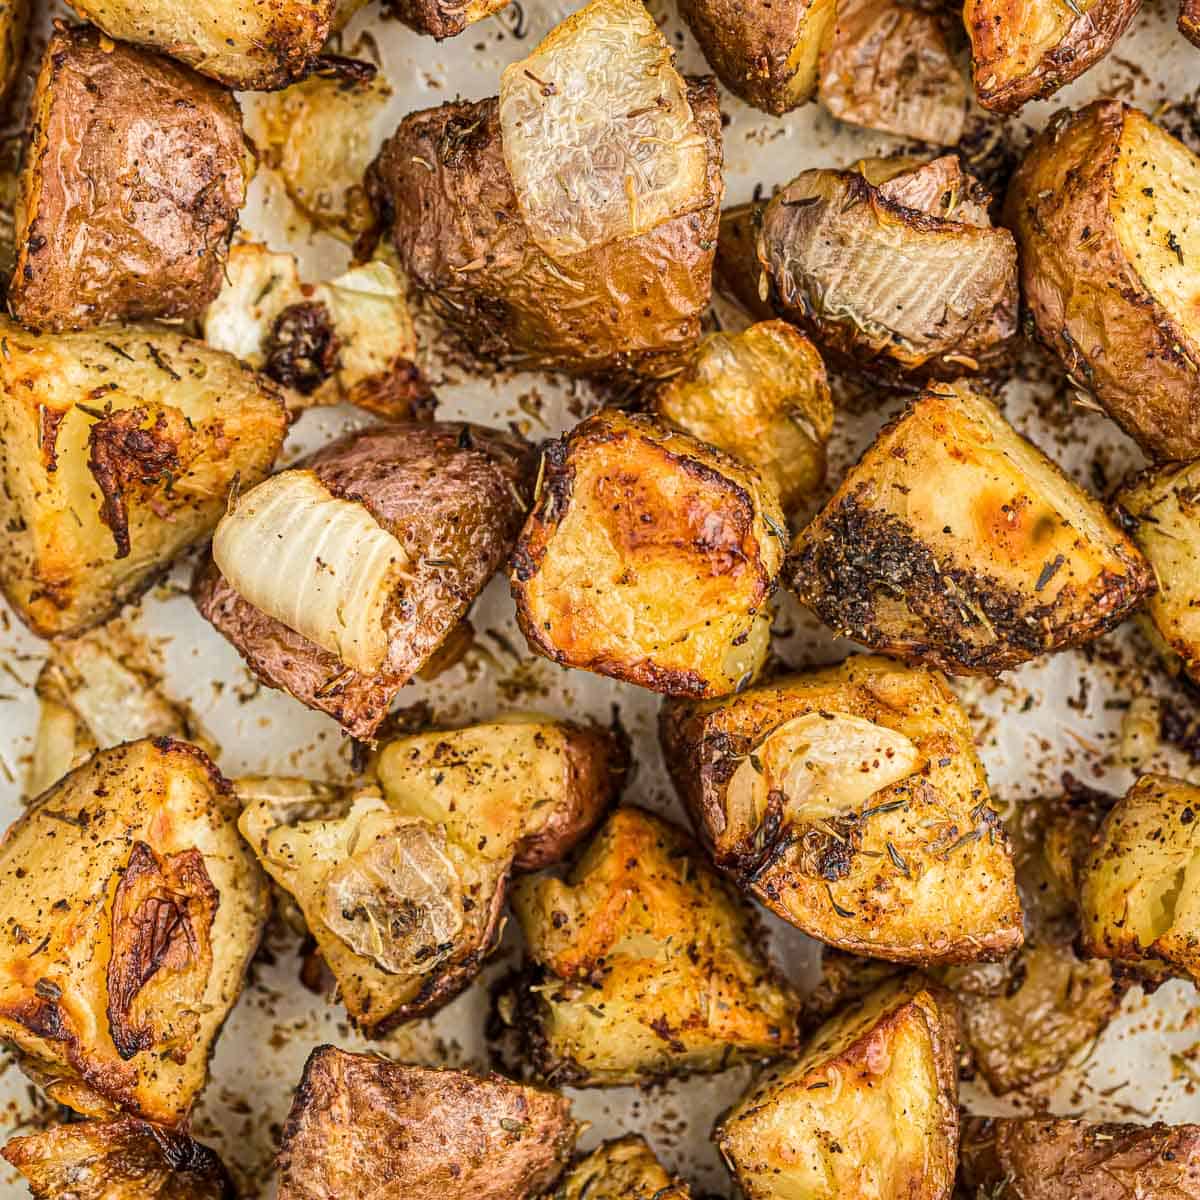 https://buildyourbite.com/wp-content/uploads/2019/04/roasted-potatoes-in-oven-7.jpg